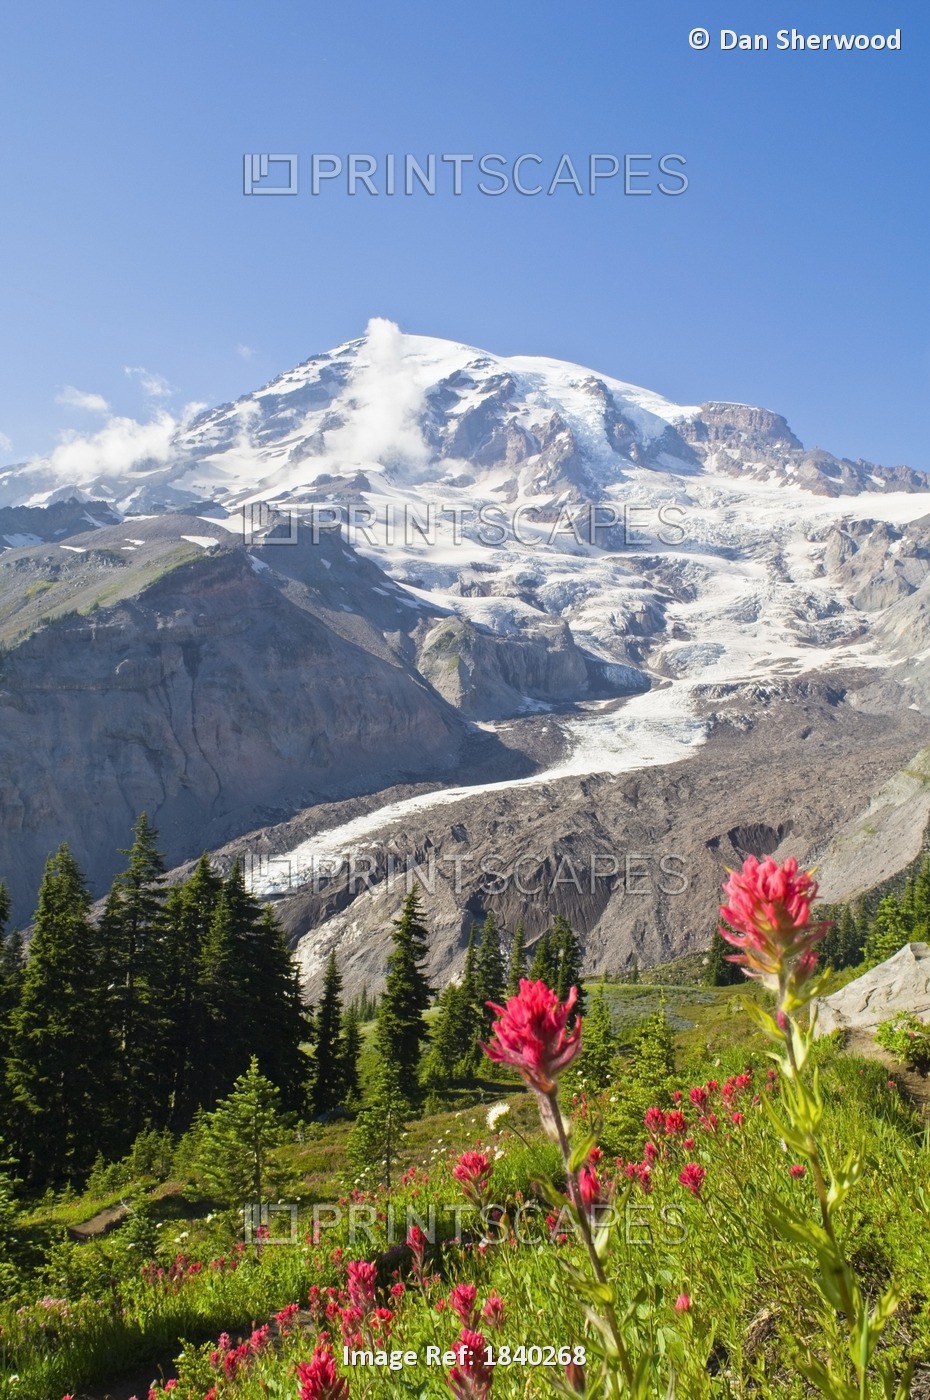 Wildflowers In Mount Rainier National Park, Washington, Usa